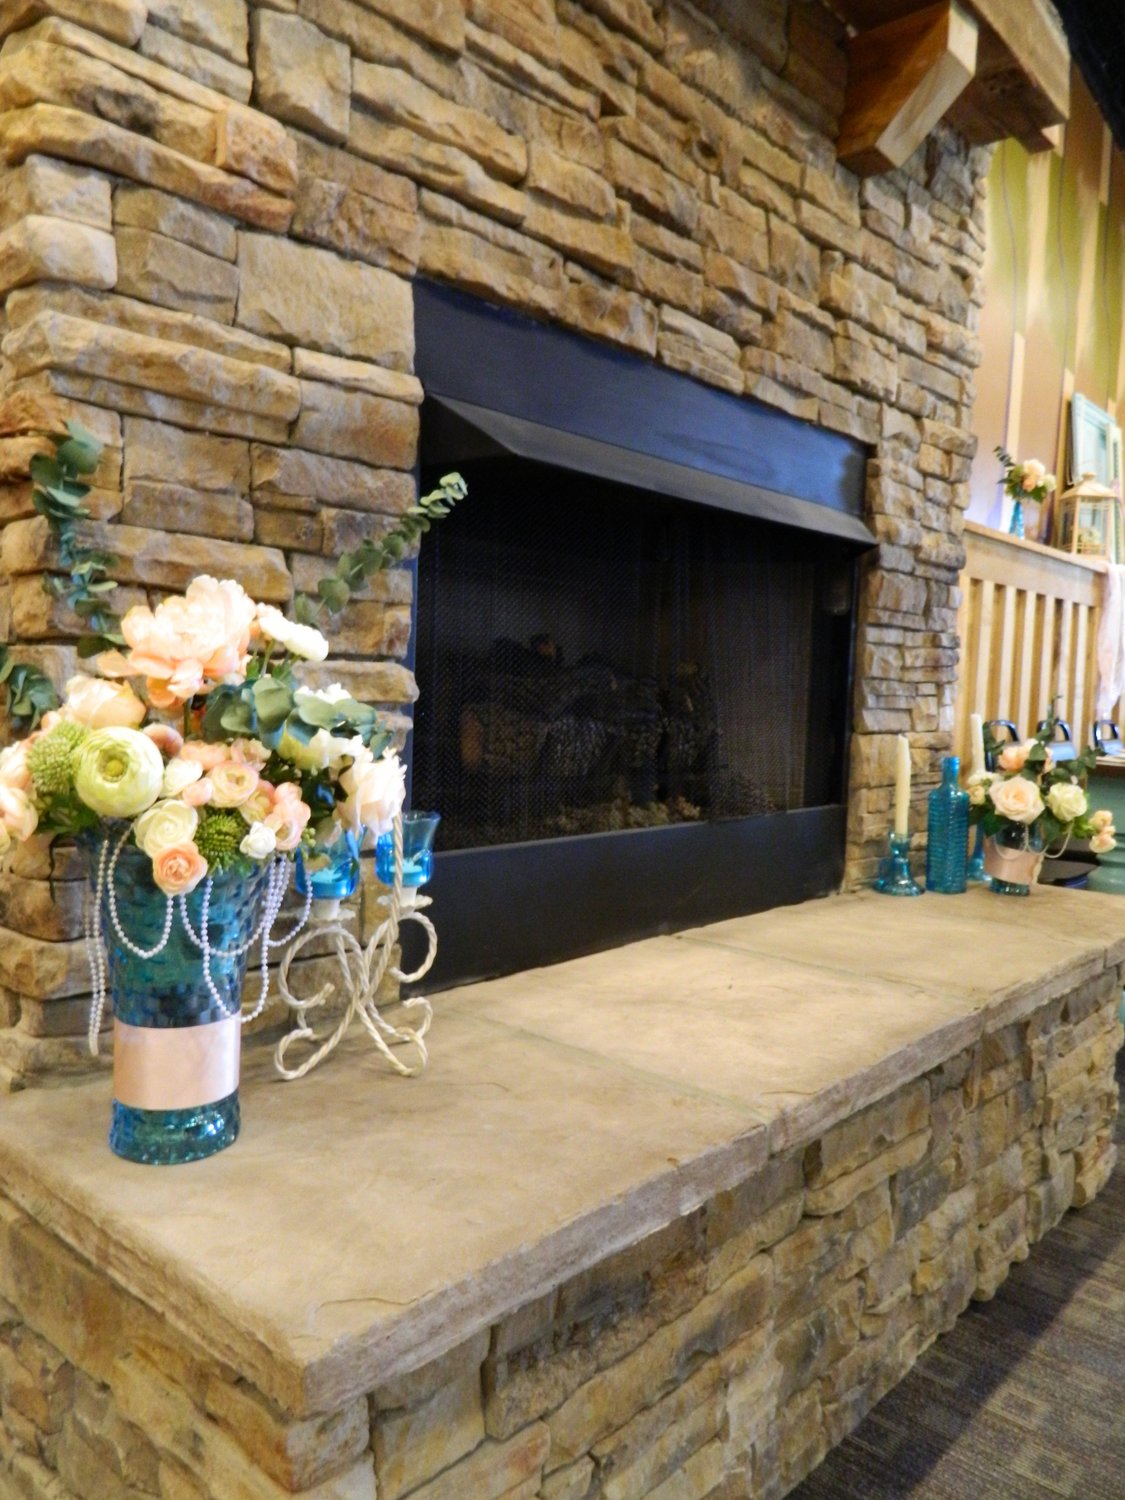 Patoka Lake Events Center Fireplace